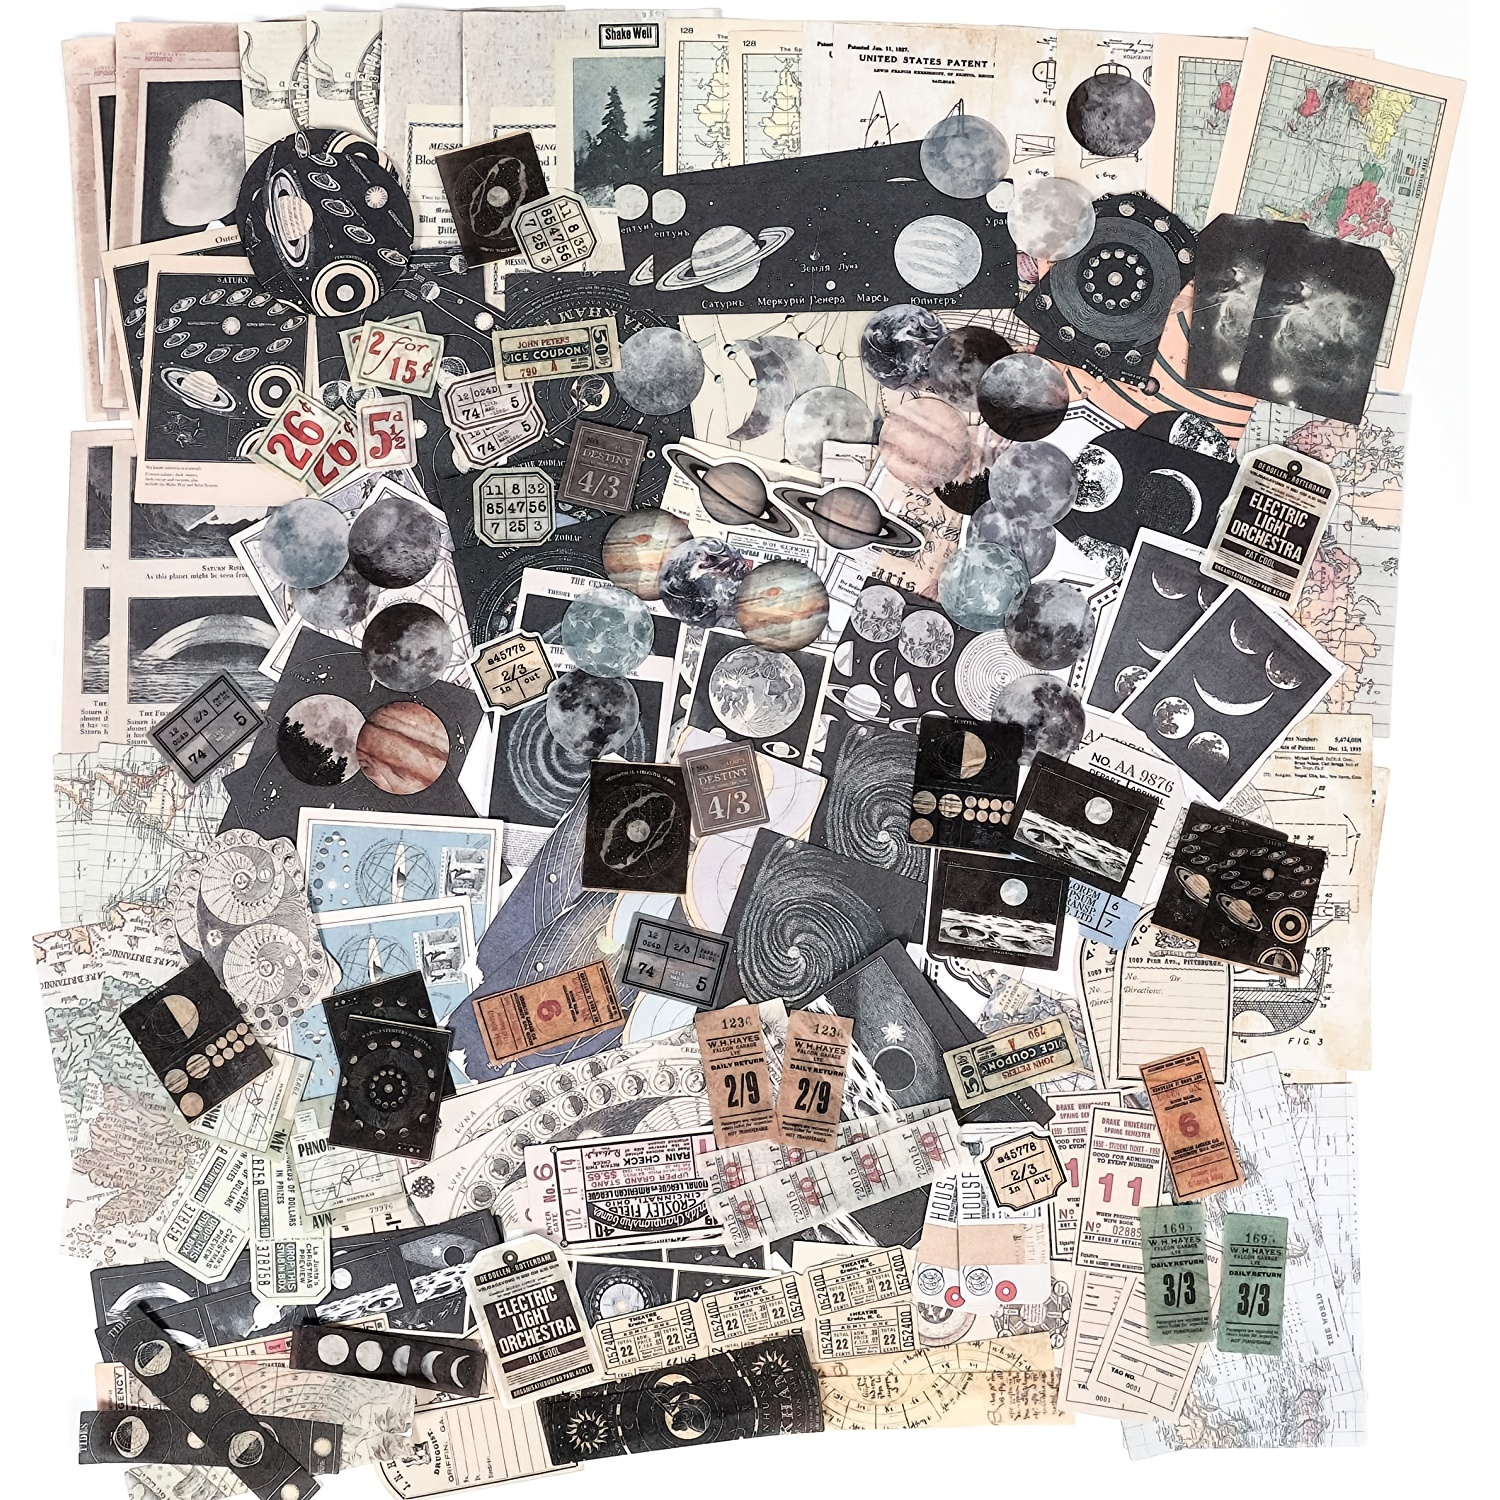 Scrapbook Supplies Pack (200 Pieces) for Art Journaling Bullet Junk Journal Supplies Planners DIY Vintage Stickers Craft Kits Notebook Collage Album